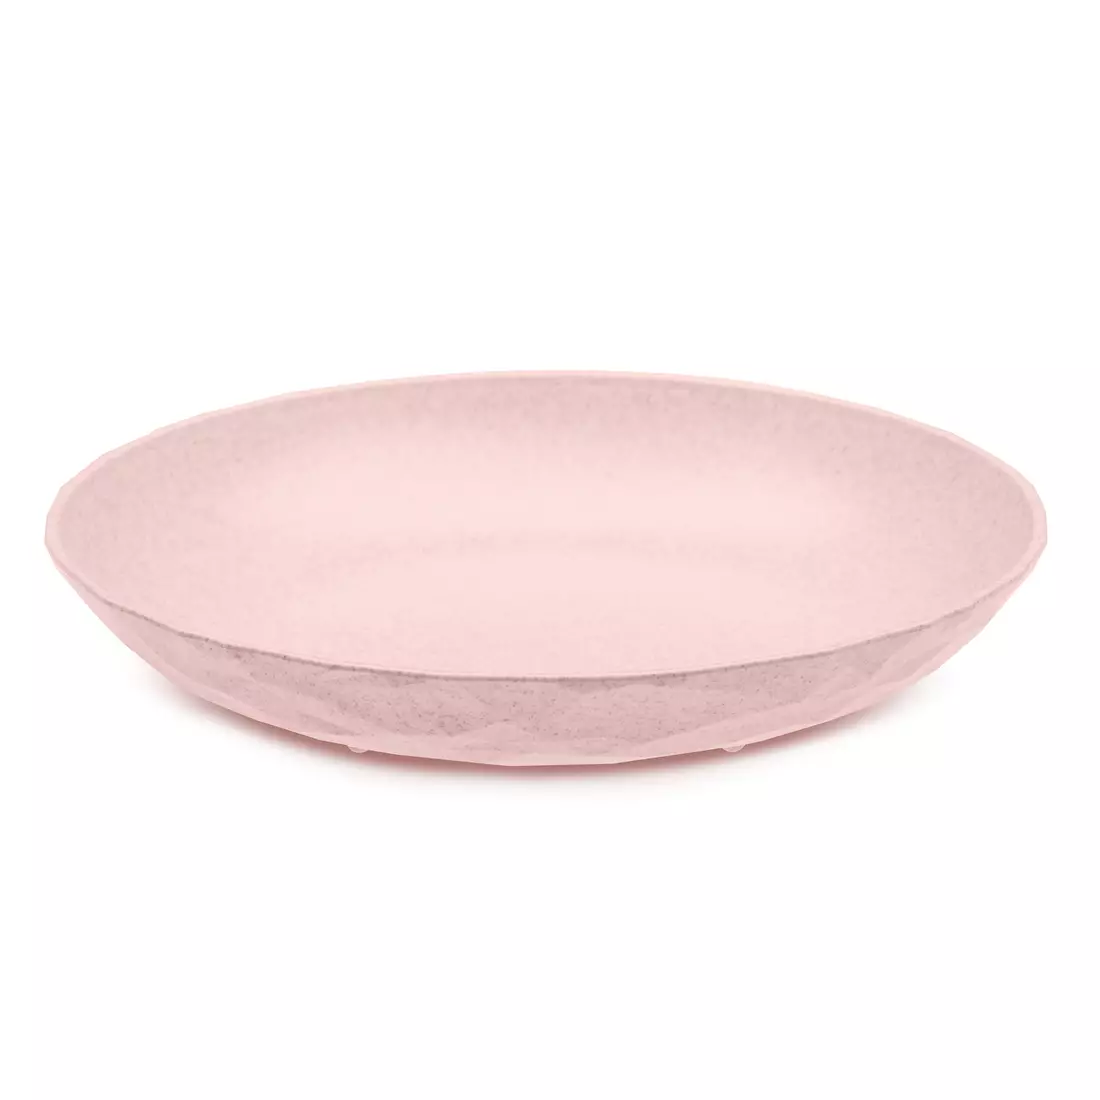 Koziol Club M tányér, organic pink